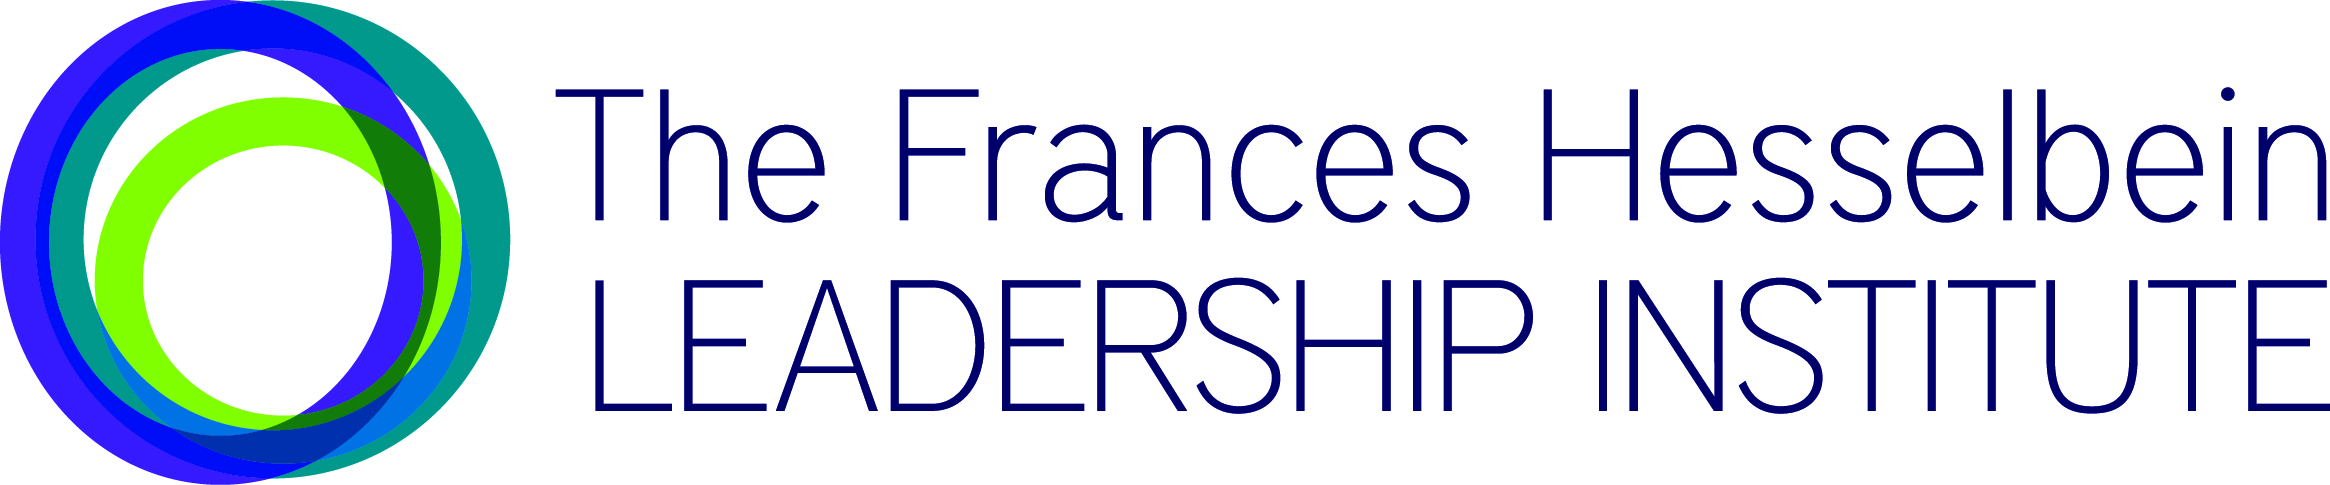 The Frances Hesselbein Leadership Institute